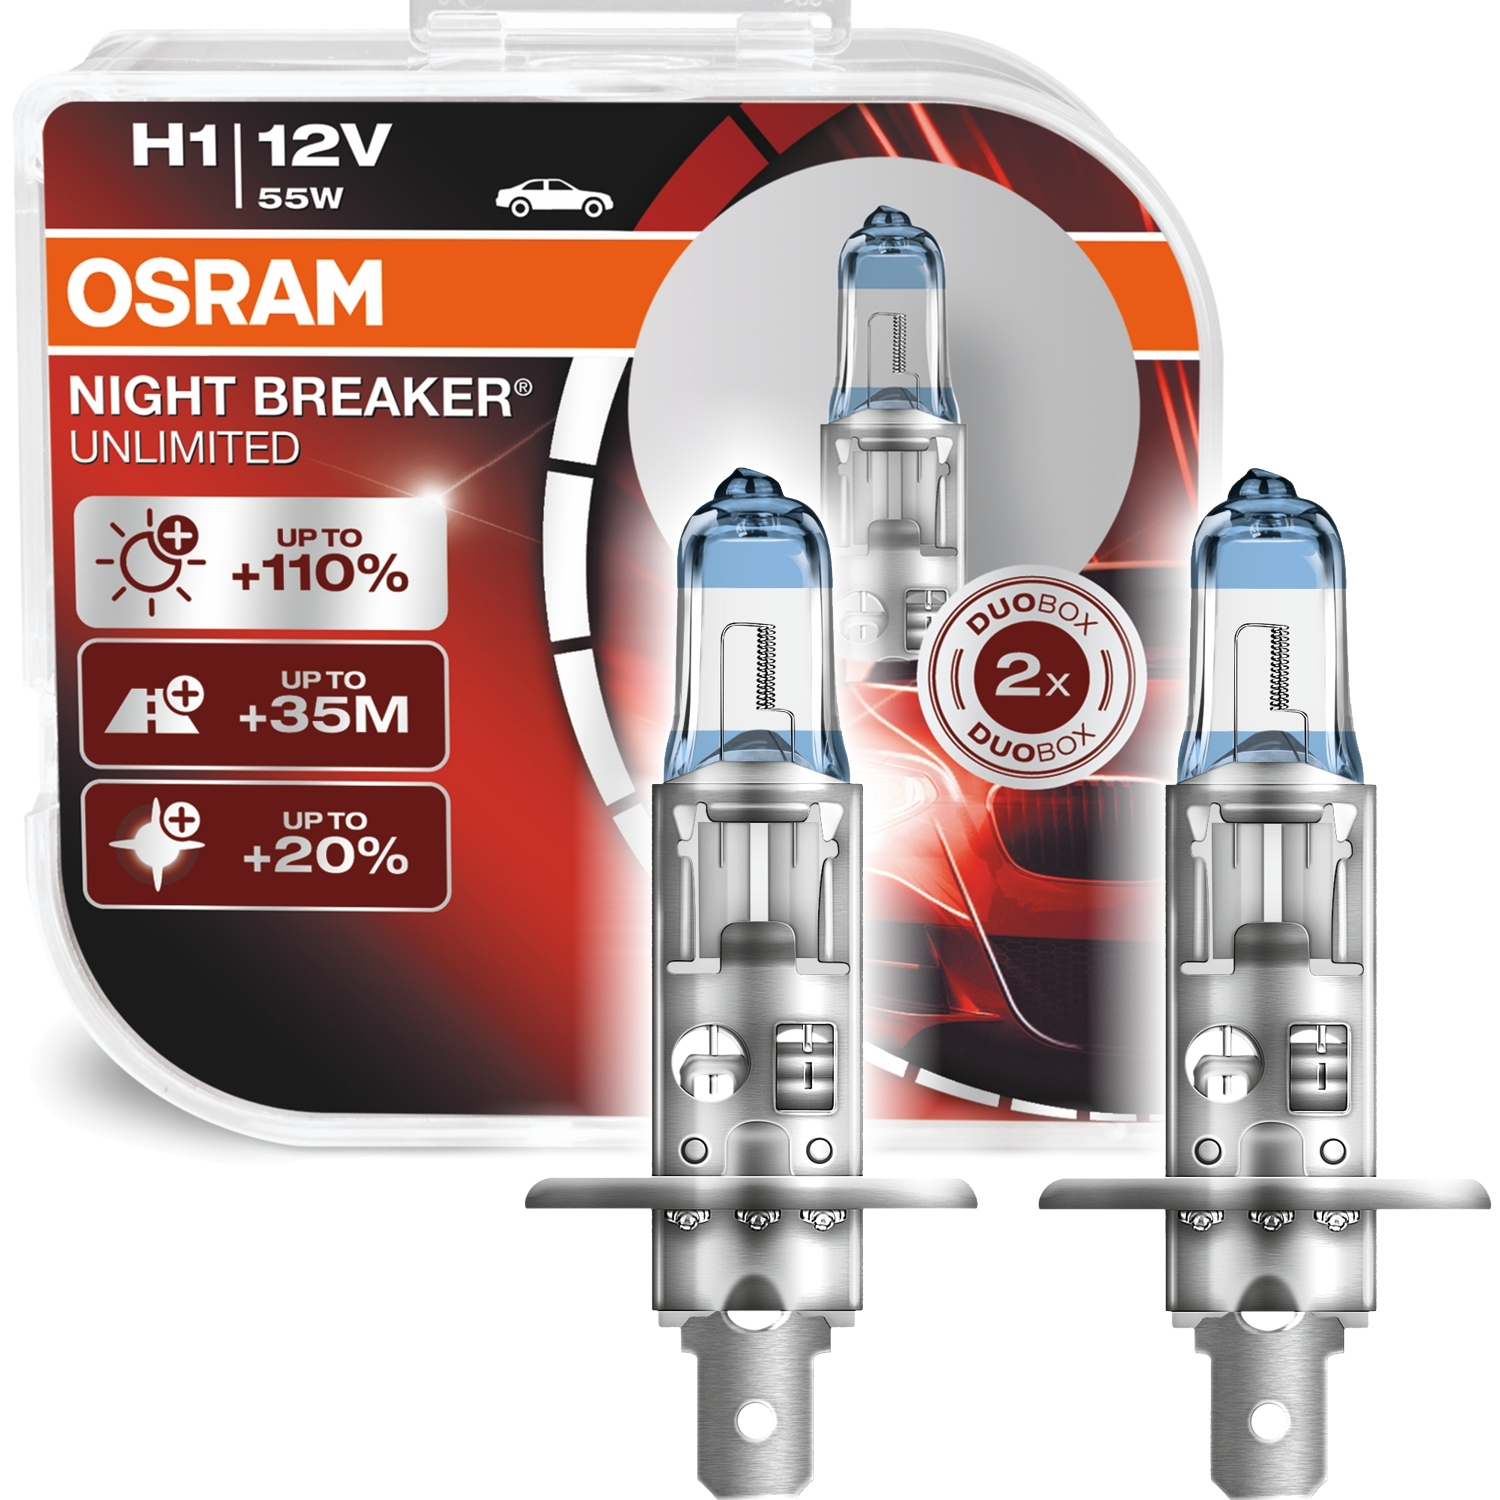 OSRAM Night Breaker Unlimited H1 12V / 55W